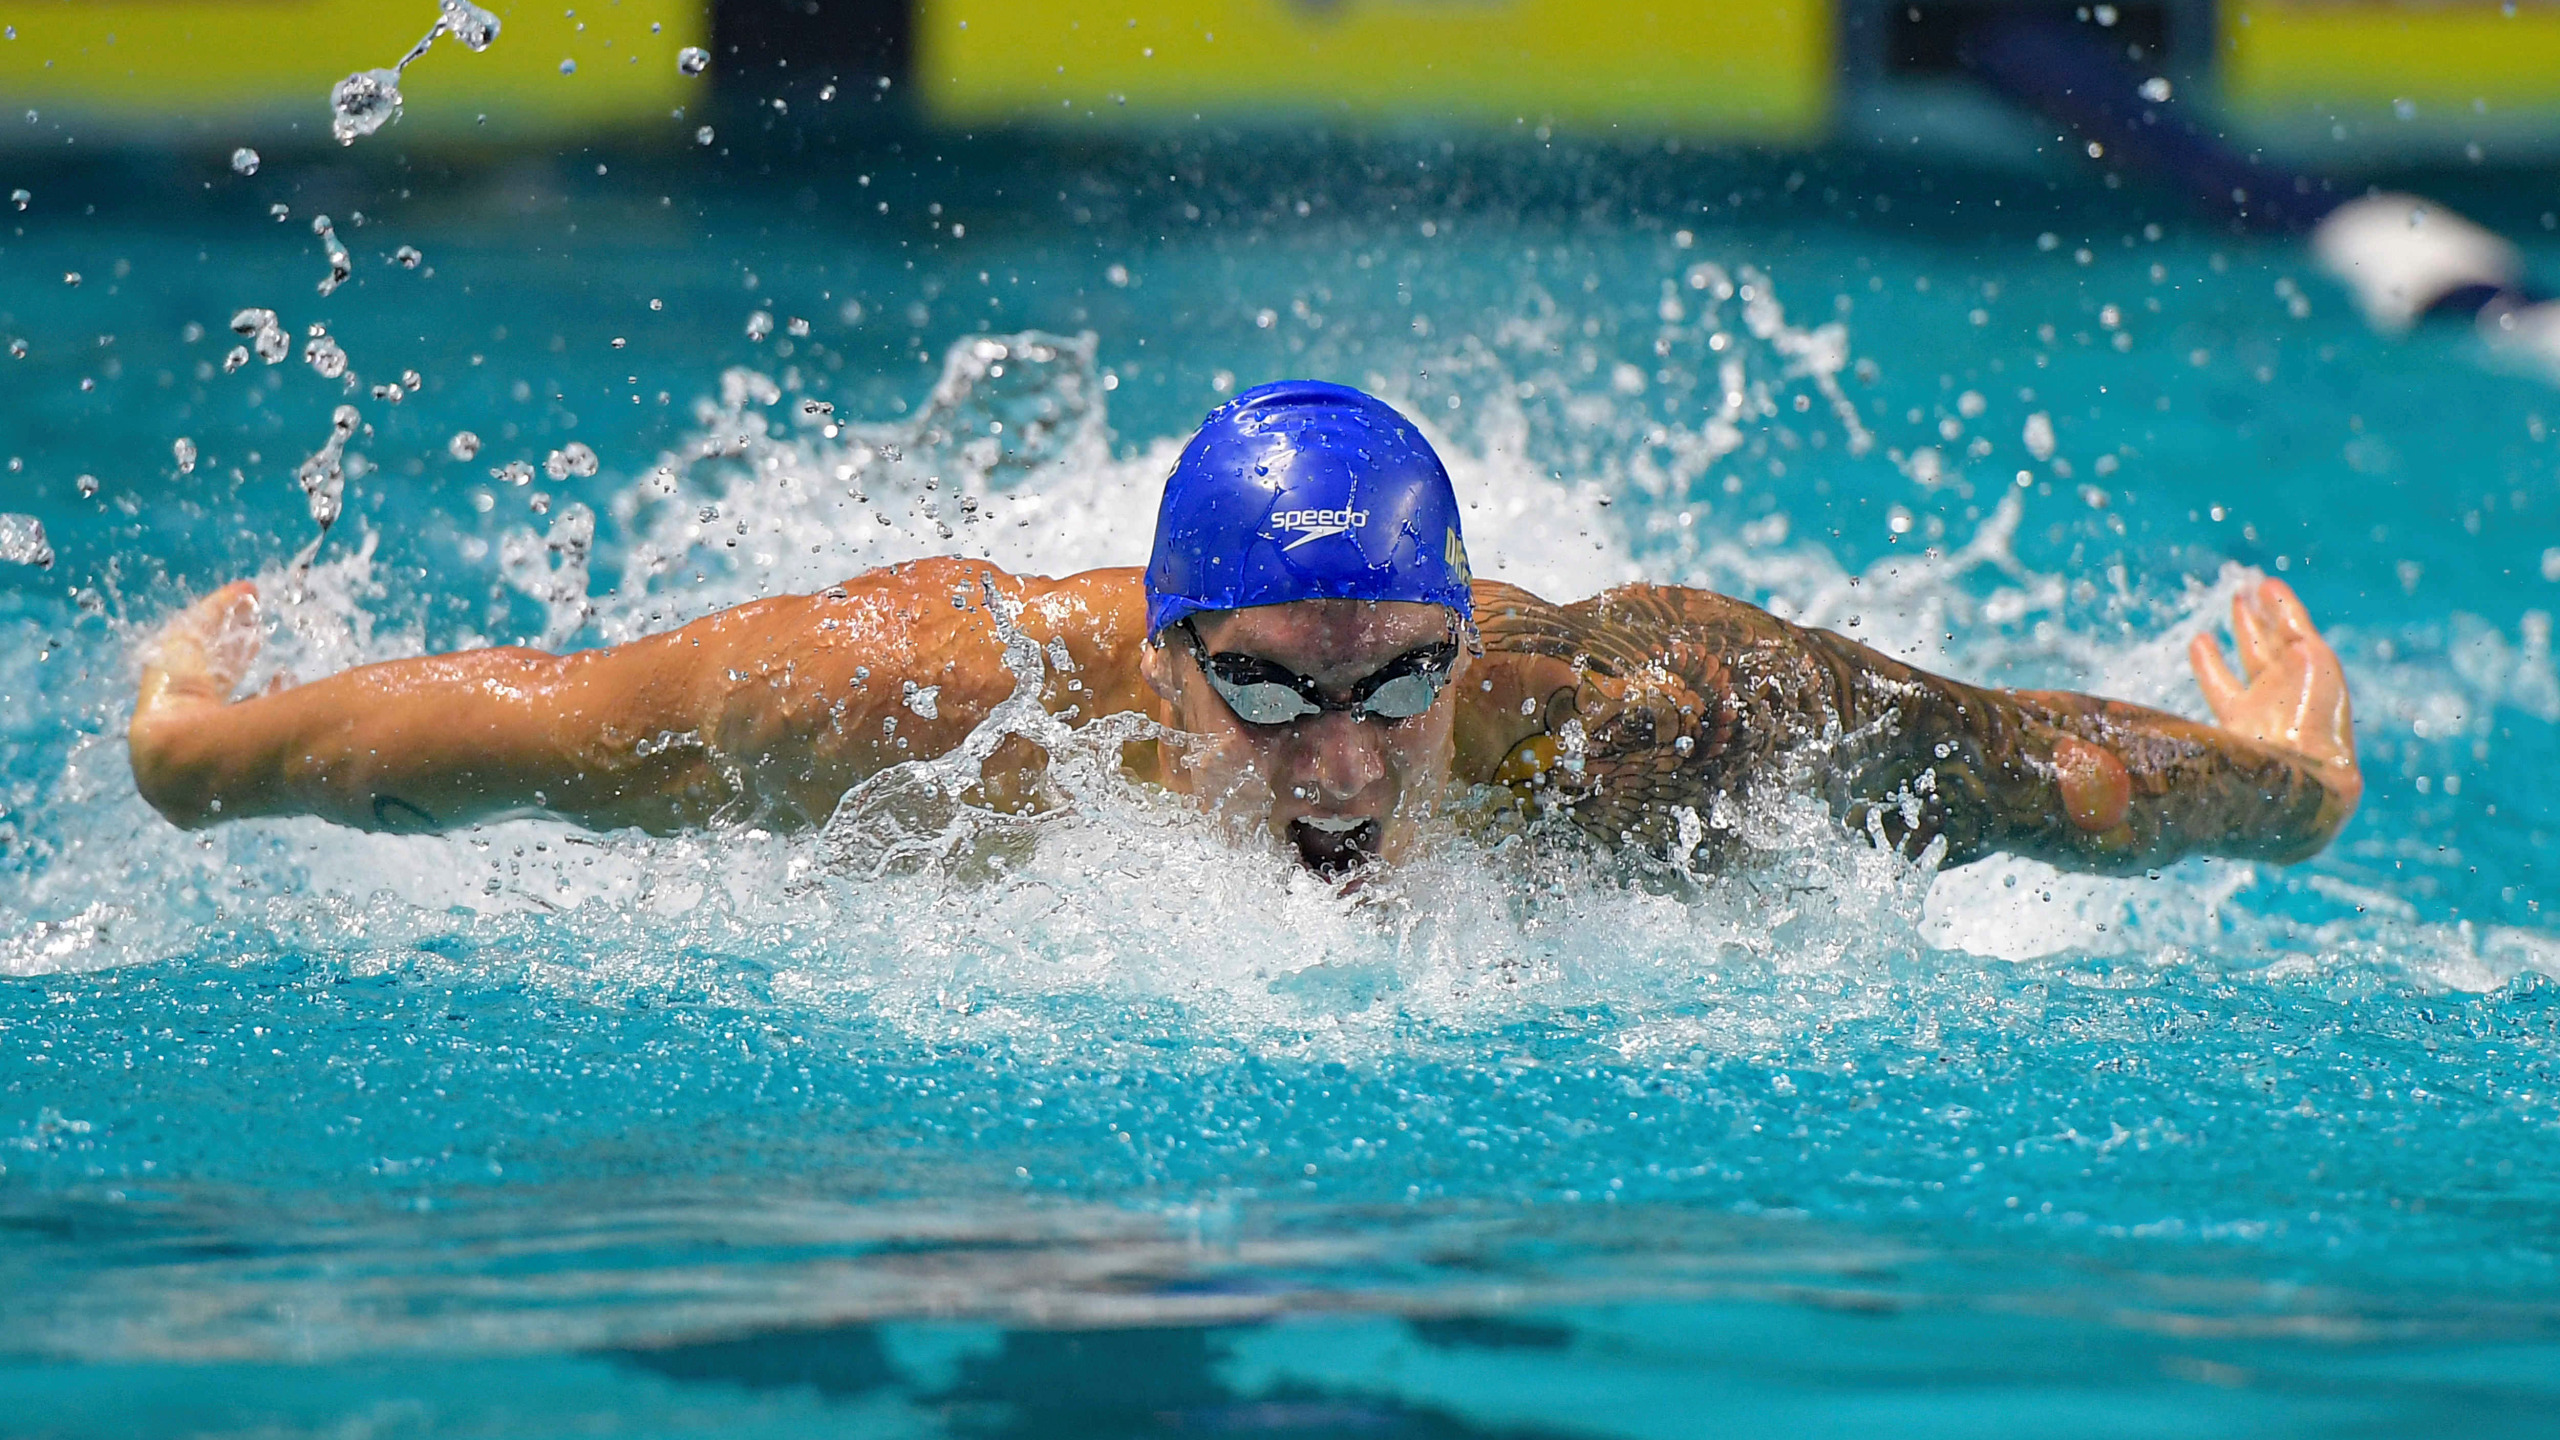 Swimmer Caeleb Dressel sets 2 world records in HungaryNews